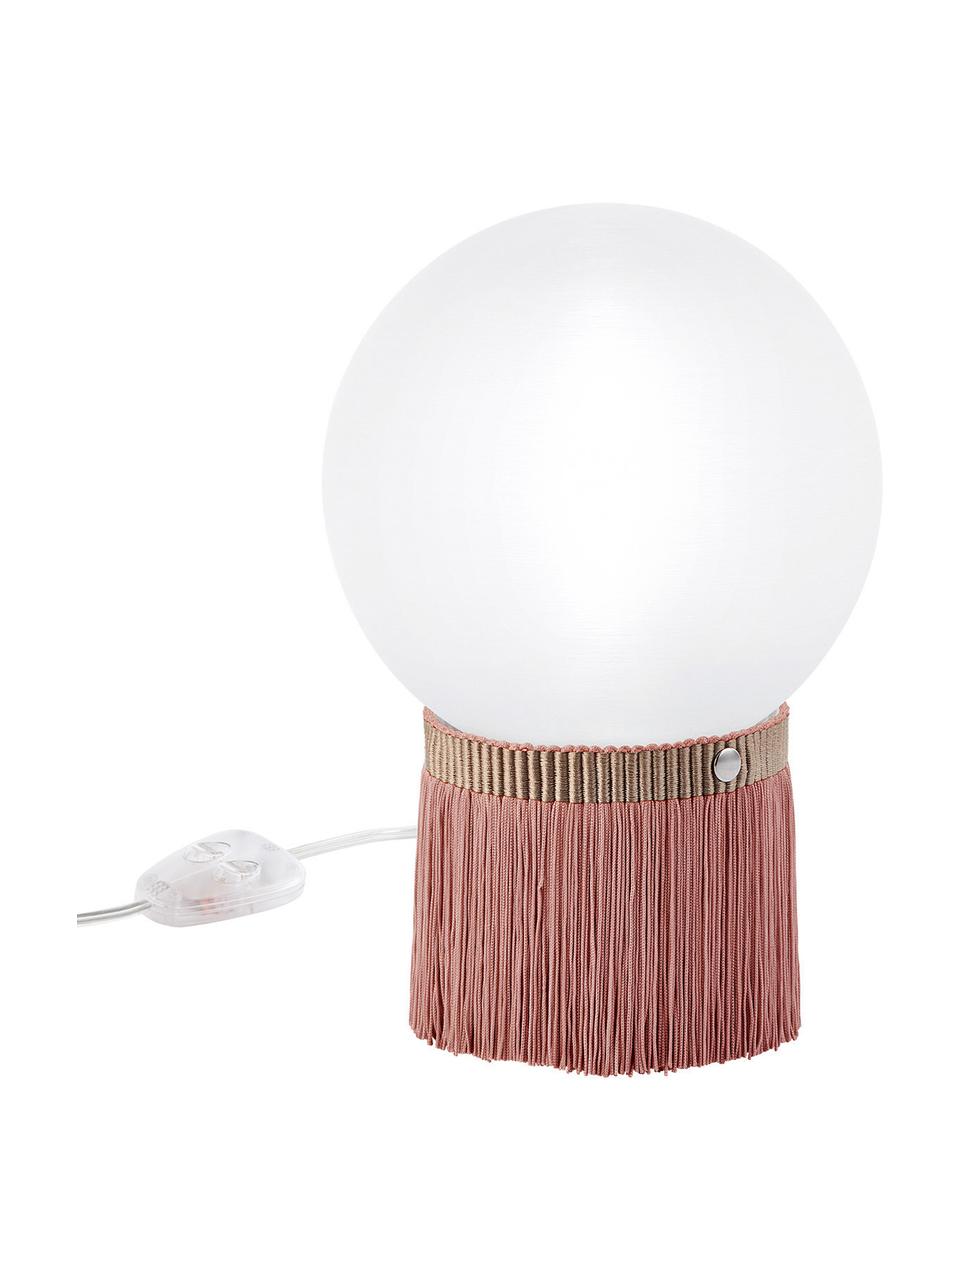 Kleine Dimmbare Tischlampe Atmosfera Fringe, Lampenschirm: Methacrylate, Opalflex, Rosa, Weiss, 20 x 30 cm